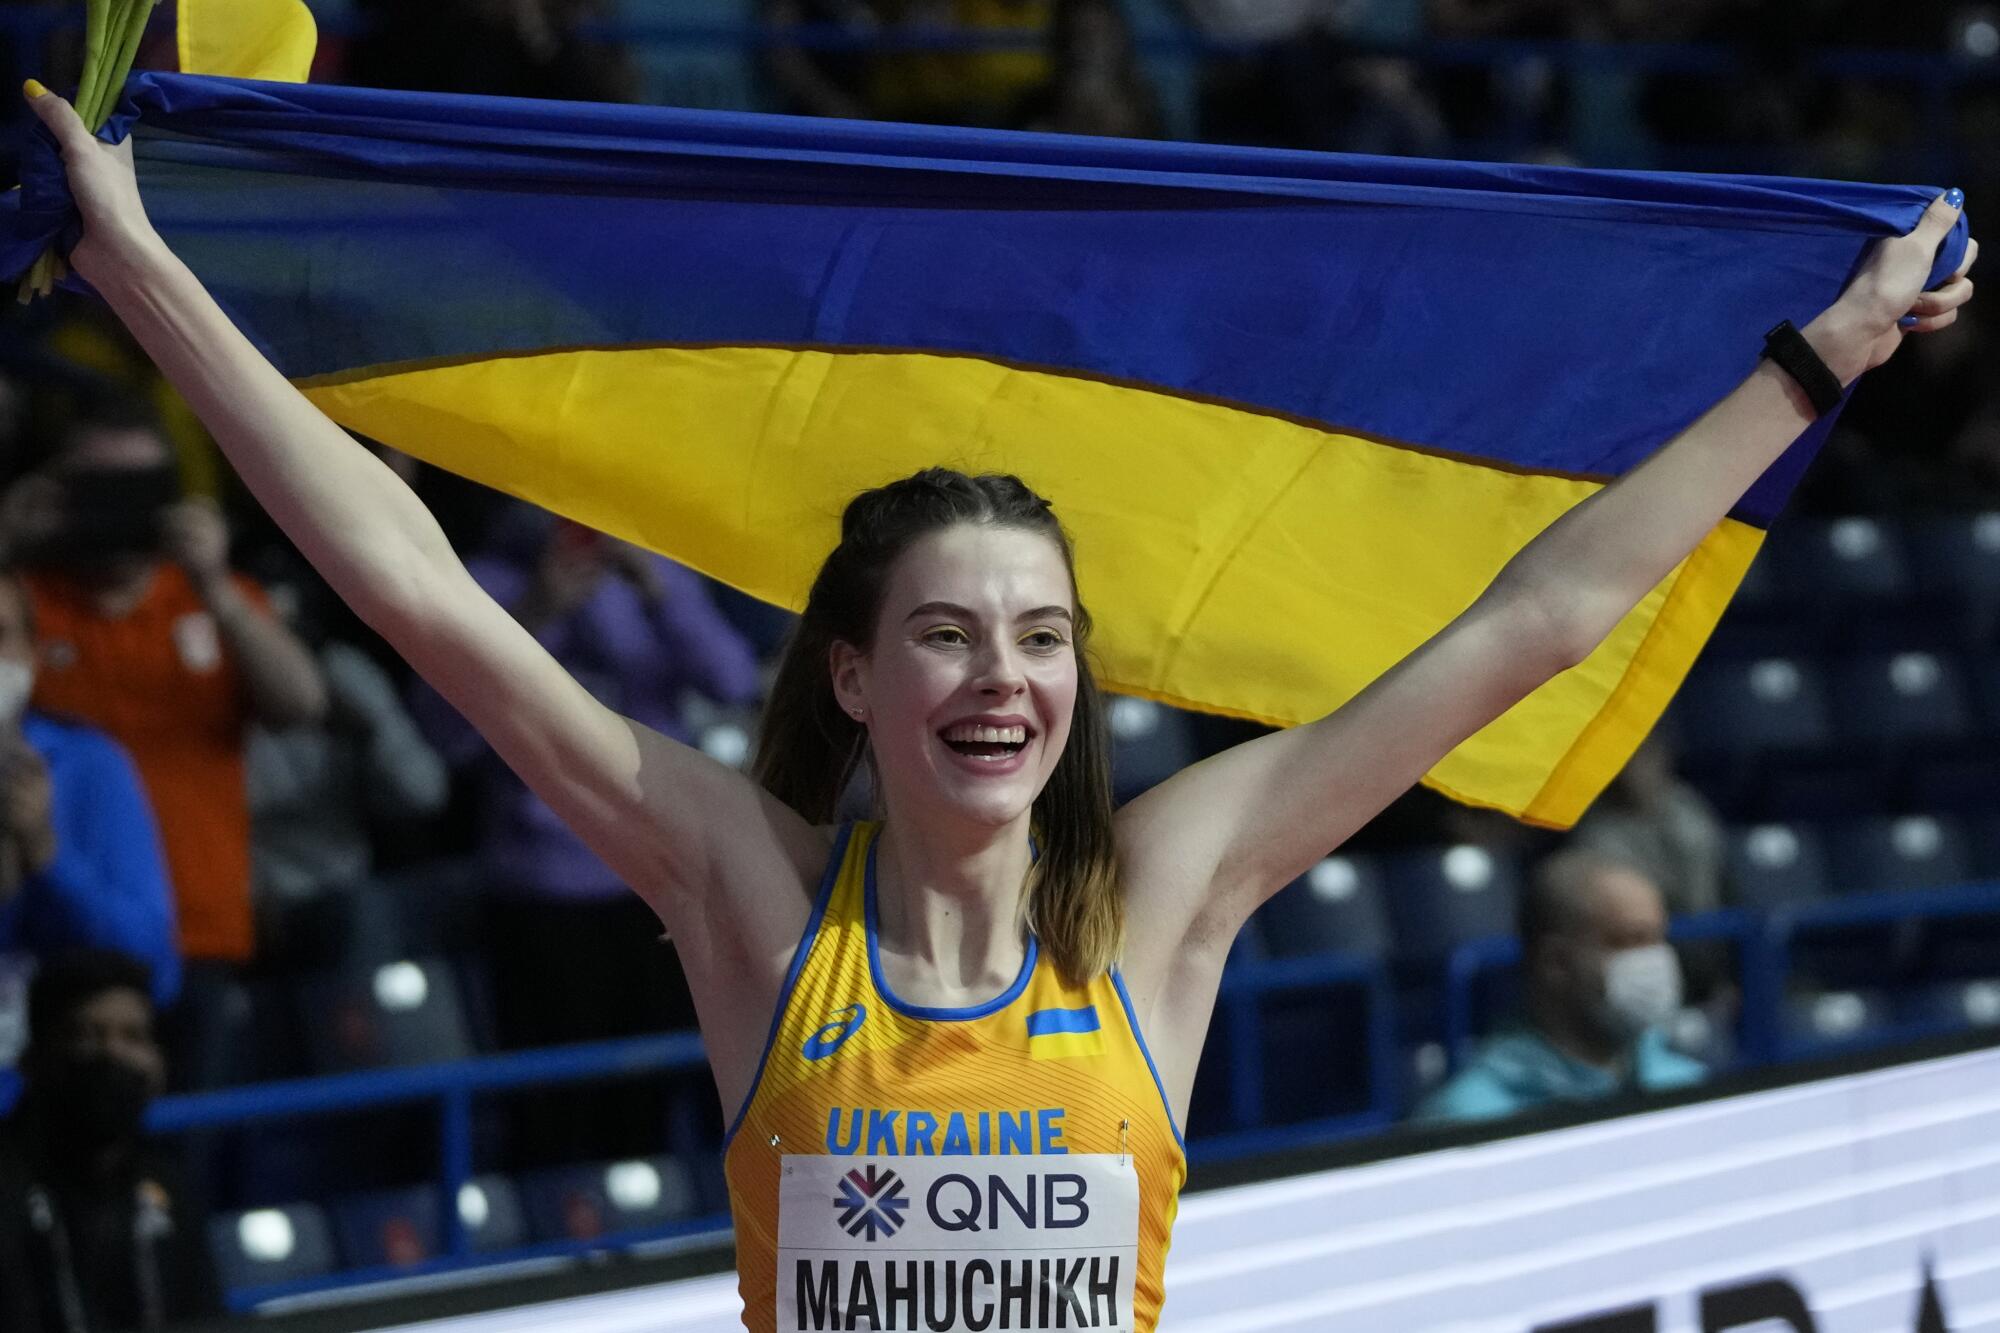 Yaroslava Mahuchikh celebrates by raising the Ukrainian flag after winning the high jump at the world indoor championships.